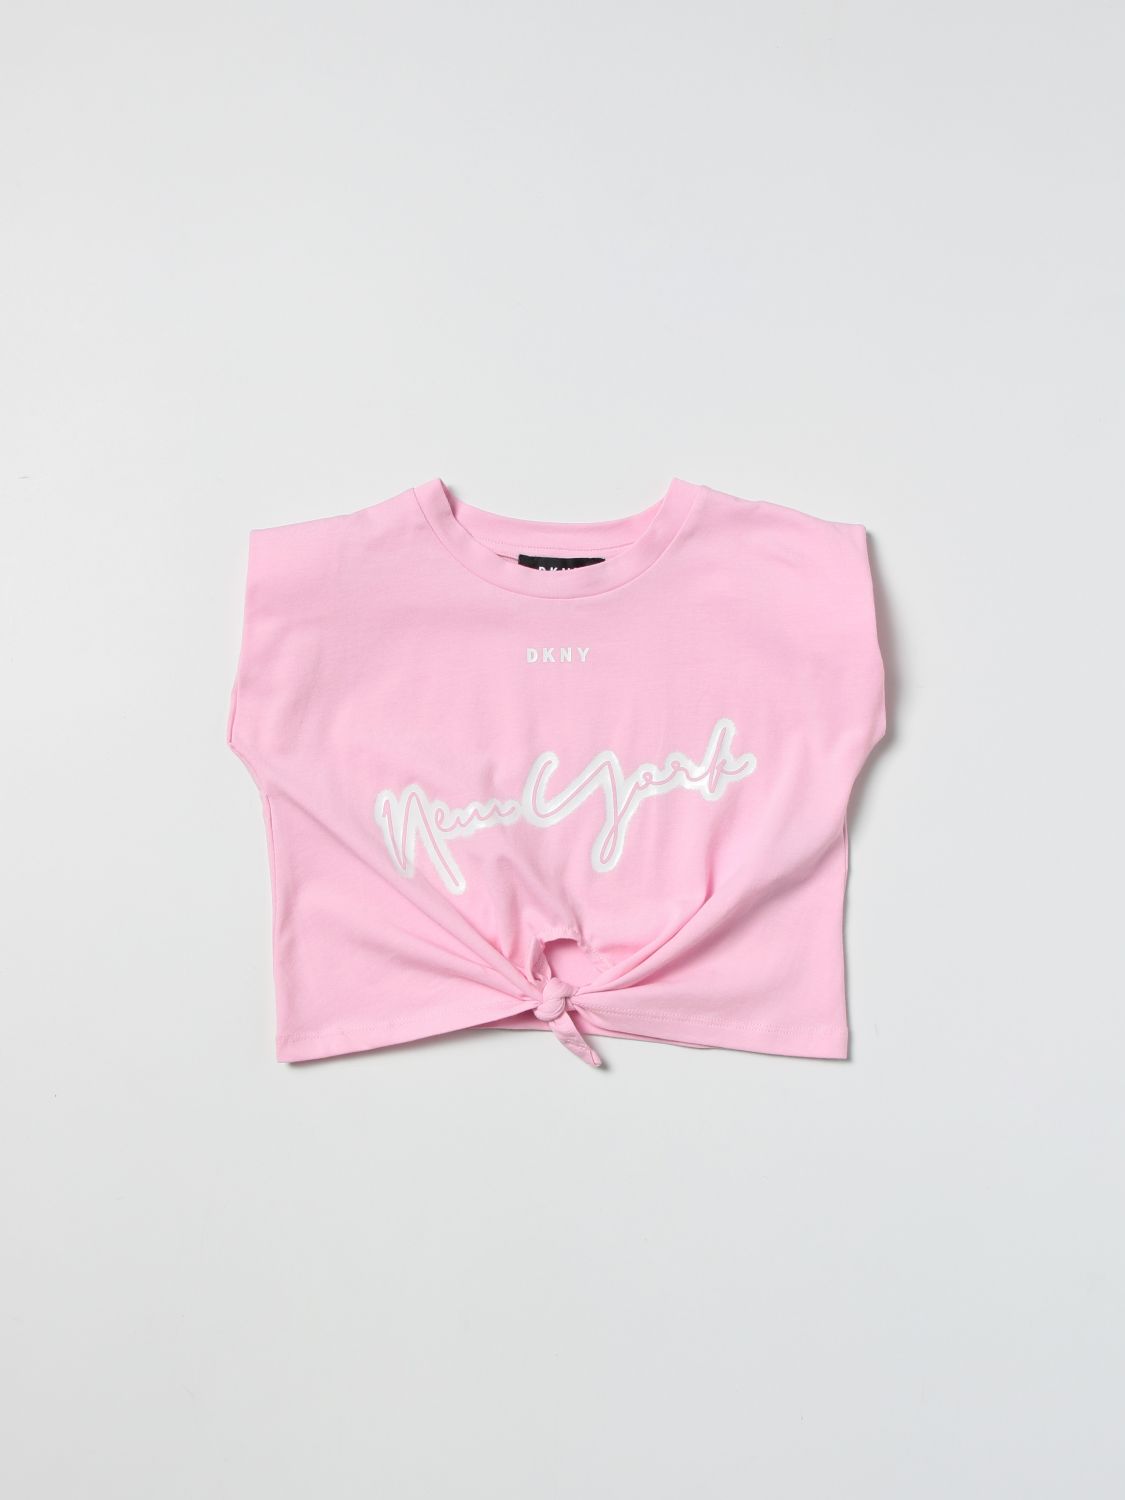 Blush Logo T-Shirt w/ Glitter Size 2T Details about   NWT Toddler Girl's DKNY Donna Karan Pink 